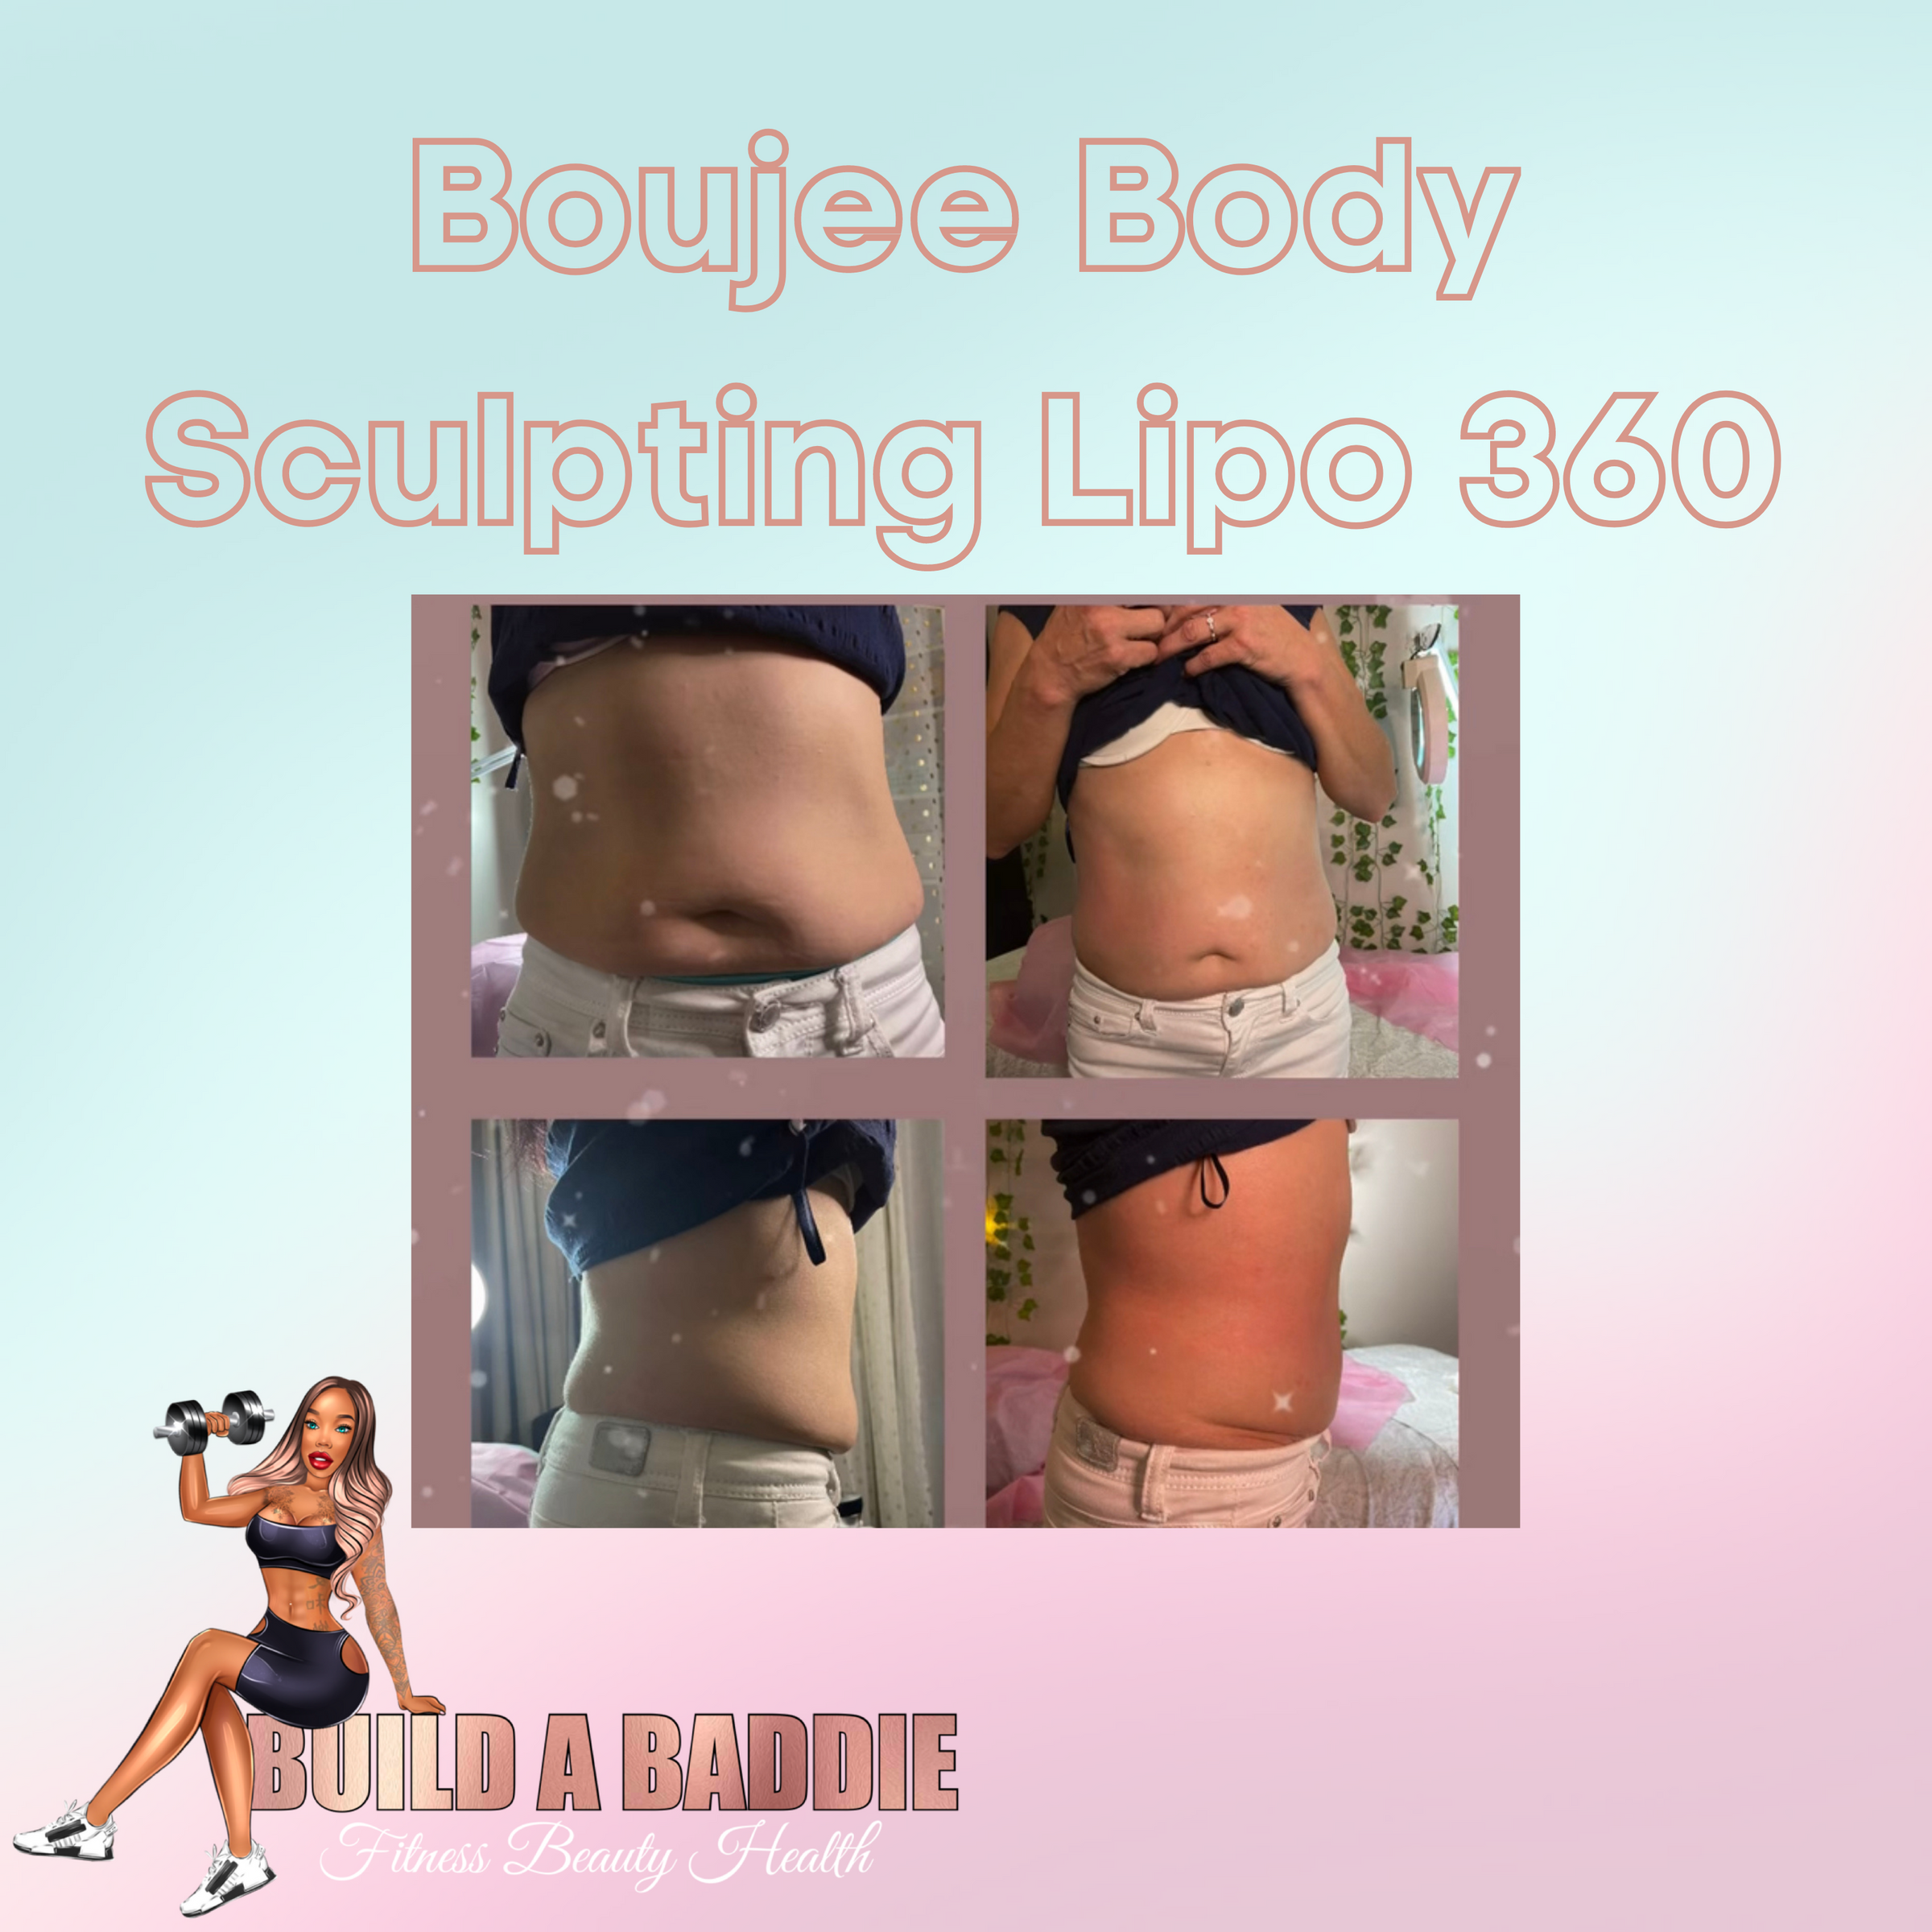 Boujee Body Sculpting - Lipo 360